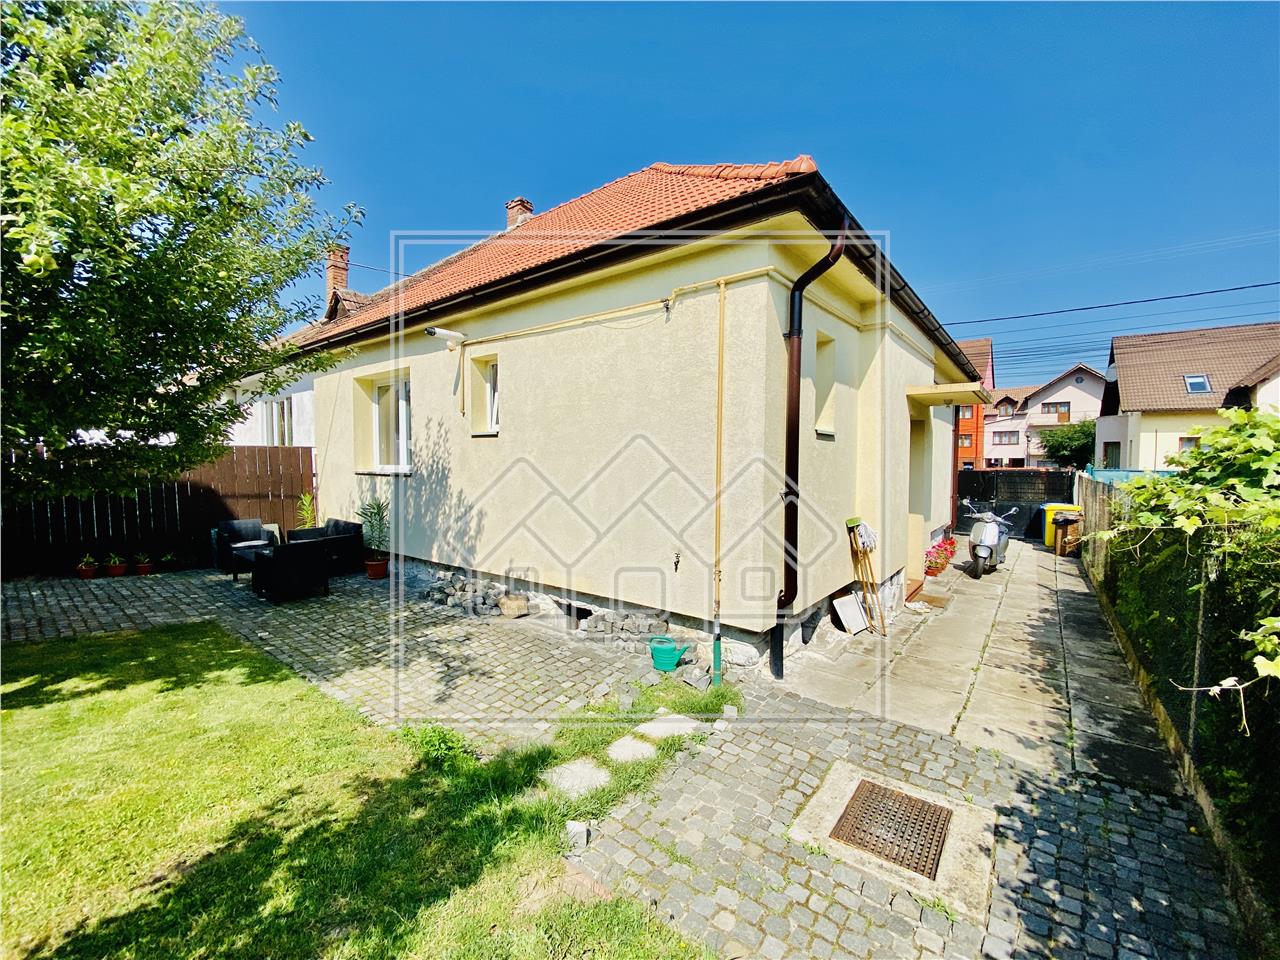 House for sale in Sibiu - 2 separate buildings